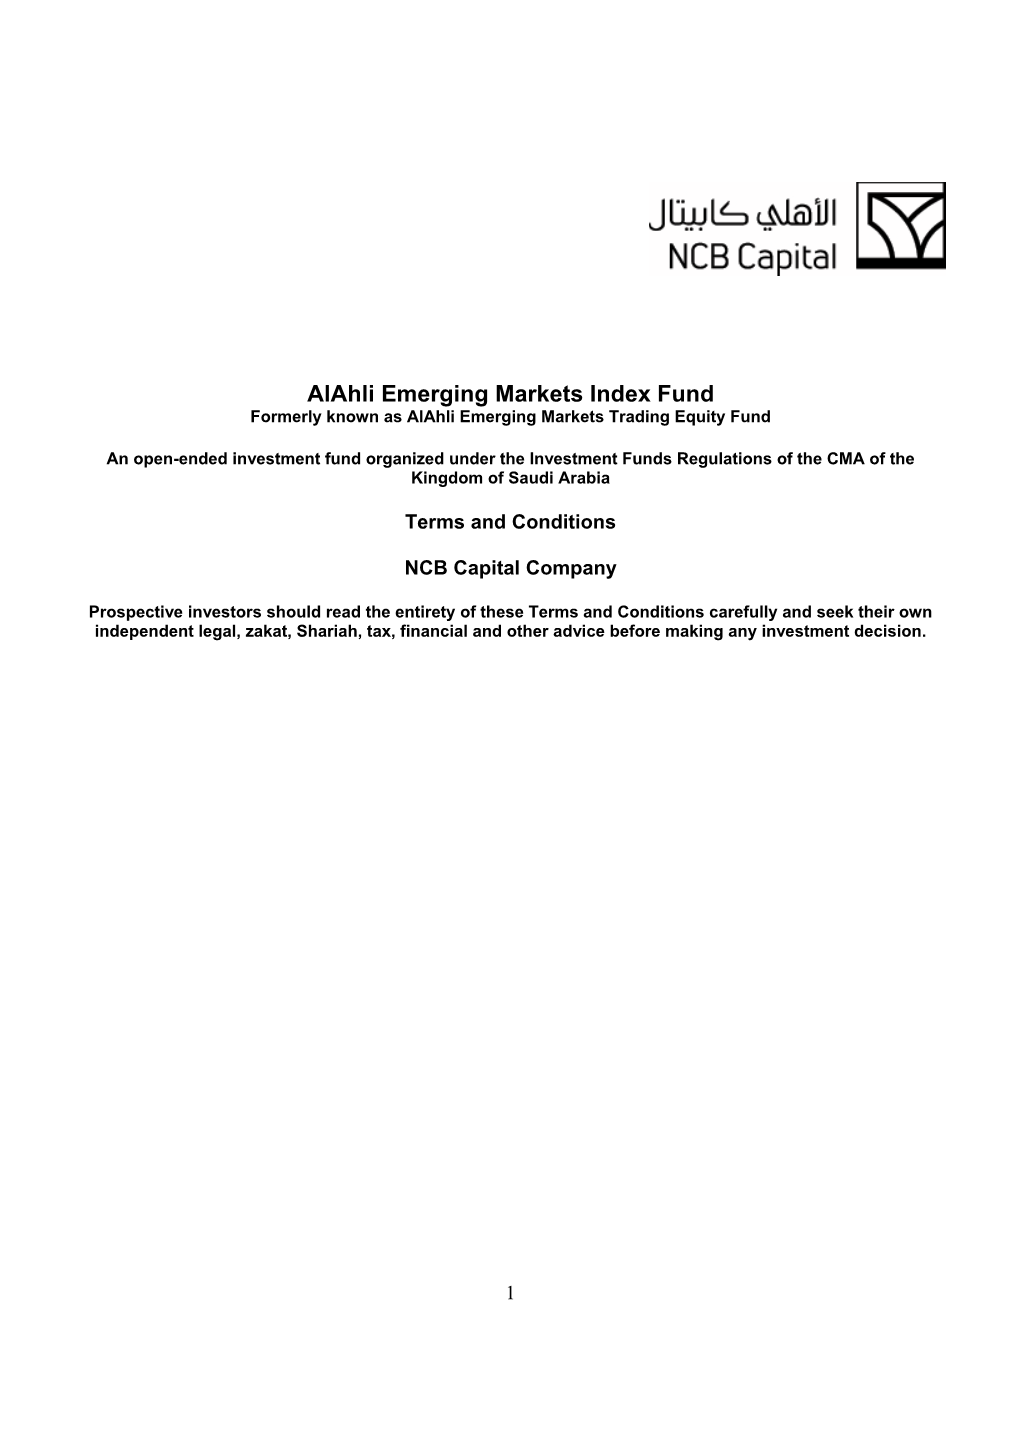 Alahli Emerging Markets Index Fund Formerly Known As Alahli Emerging Markets Trading Equity Fund